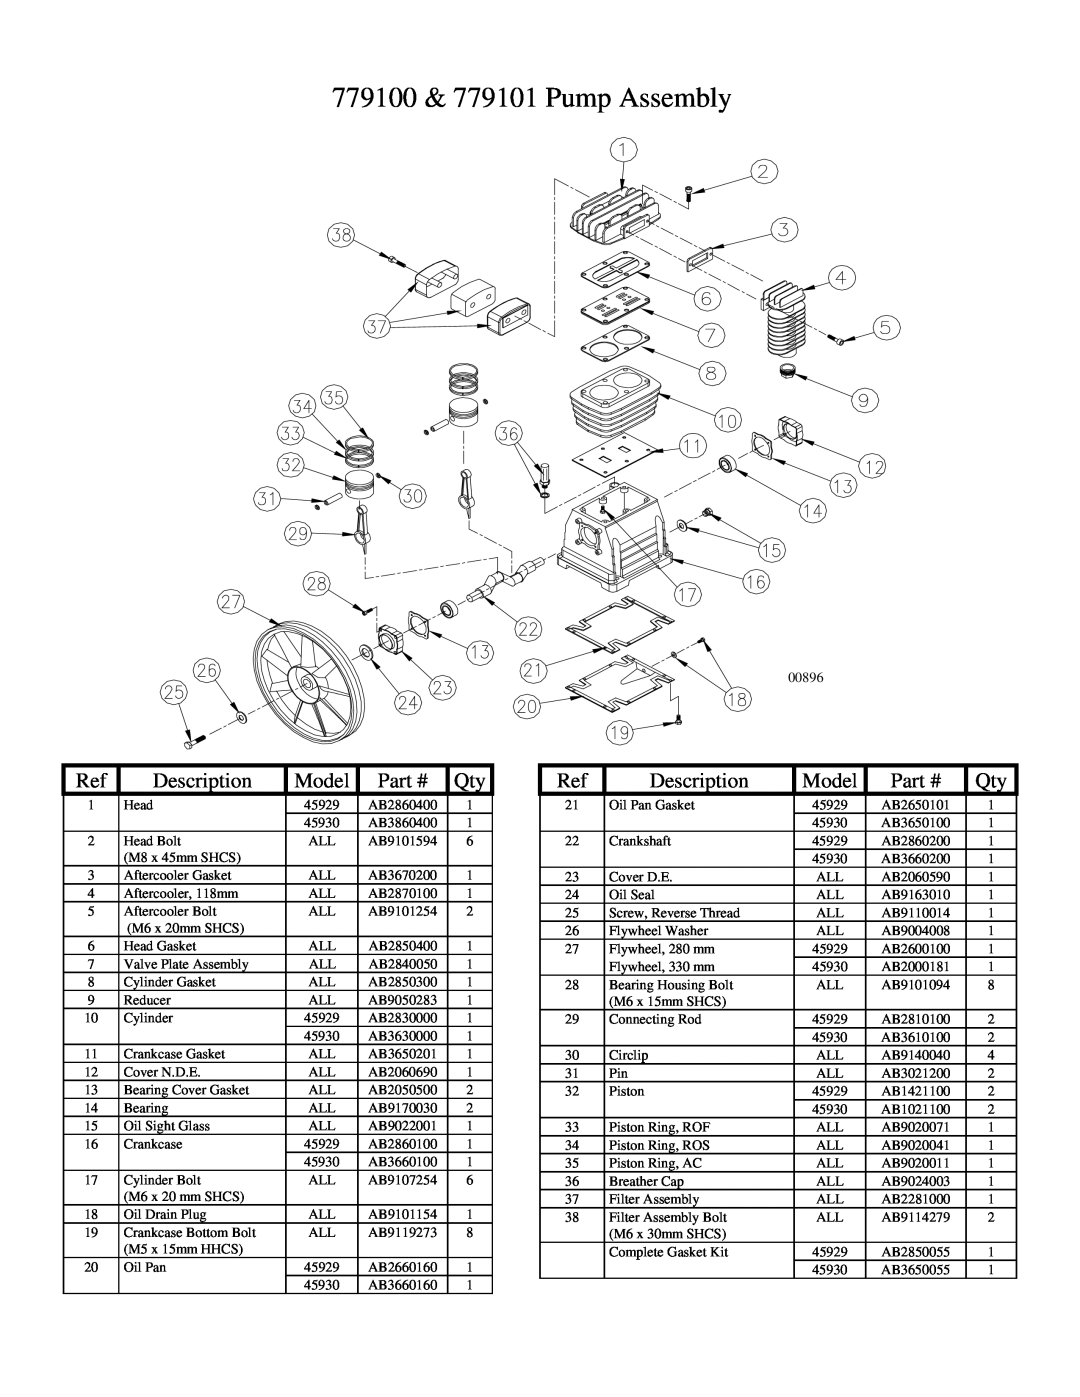 Northern Industrial Tools 45930, M35982E, 45929 owner manual 779100 & 779101 Pump Assembly, Description, Model 